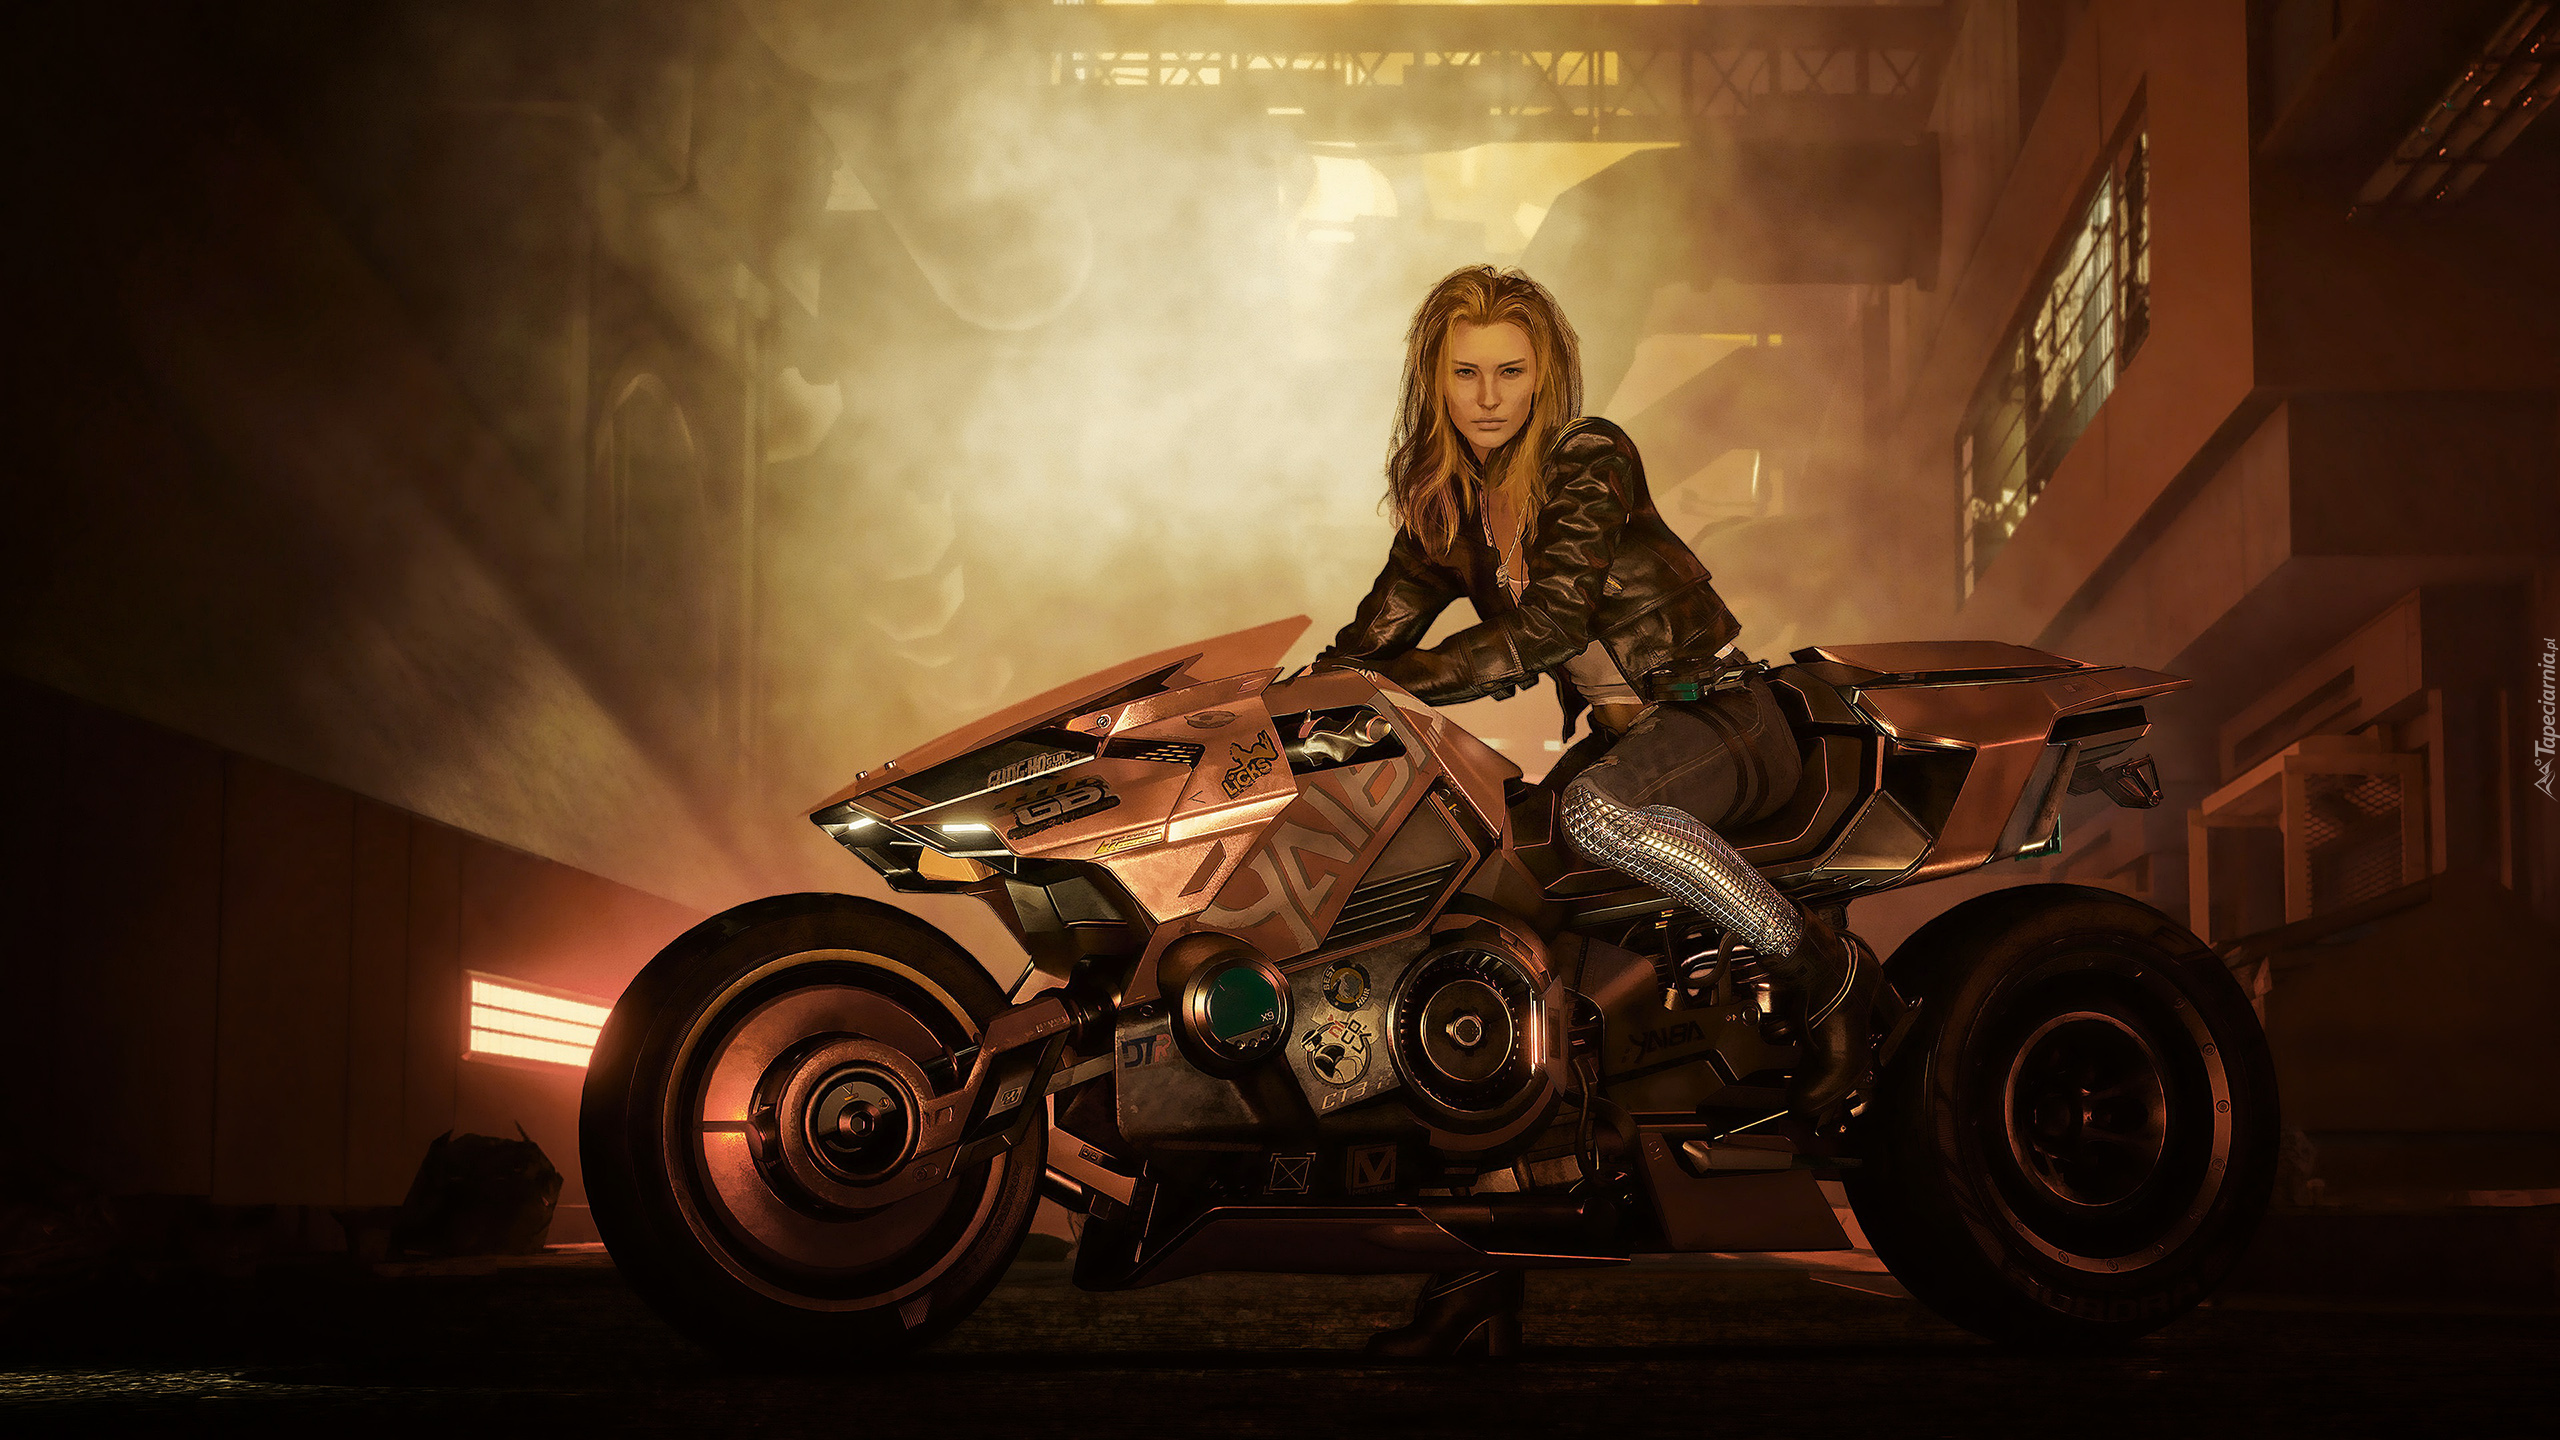 Gra, Cyberpunk 2077, Kobieta, Motocykl